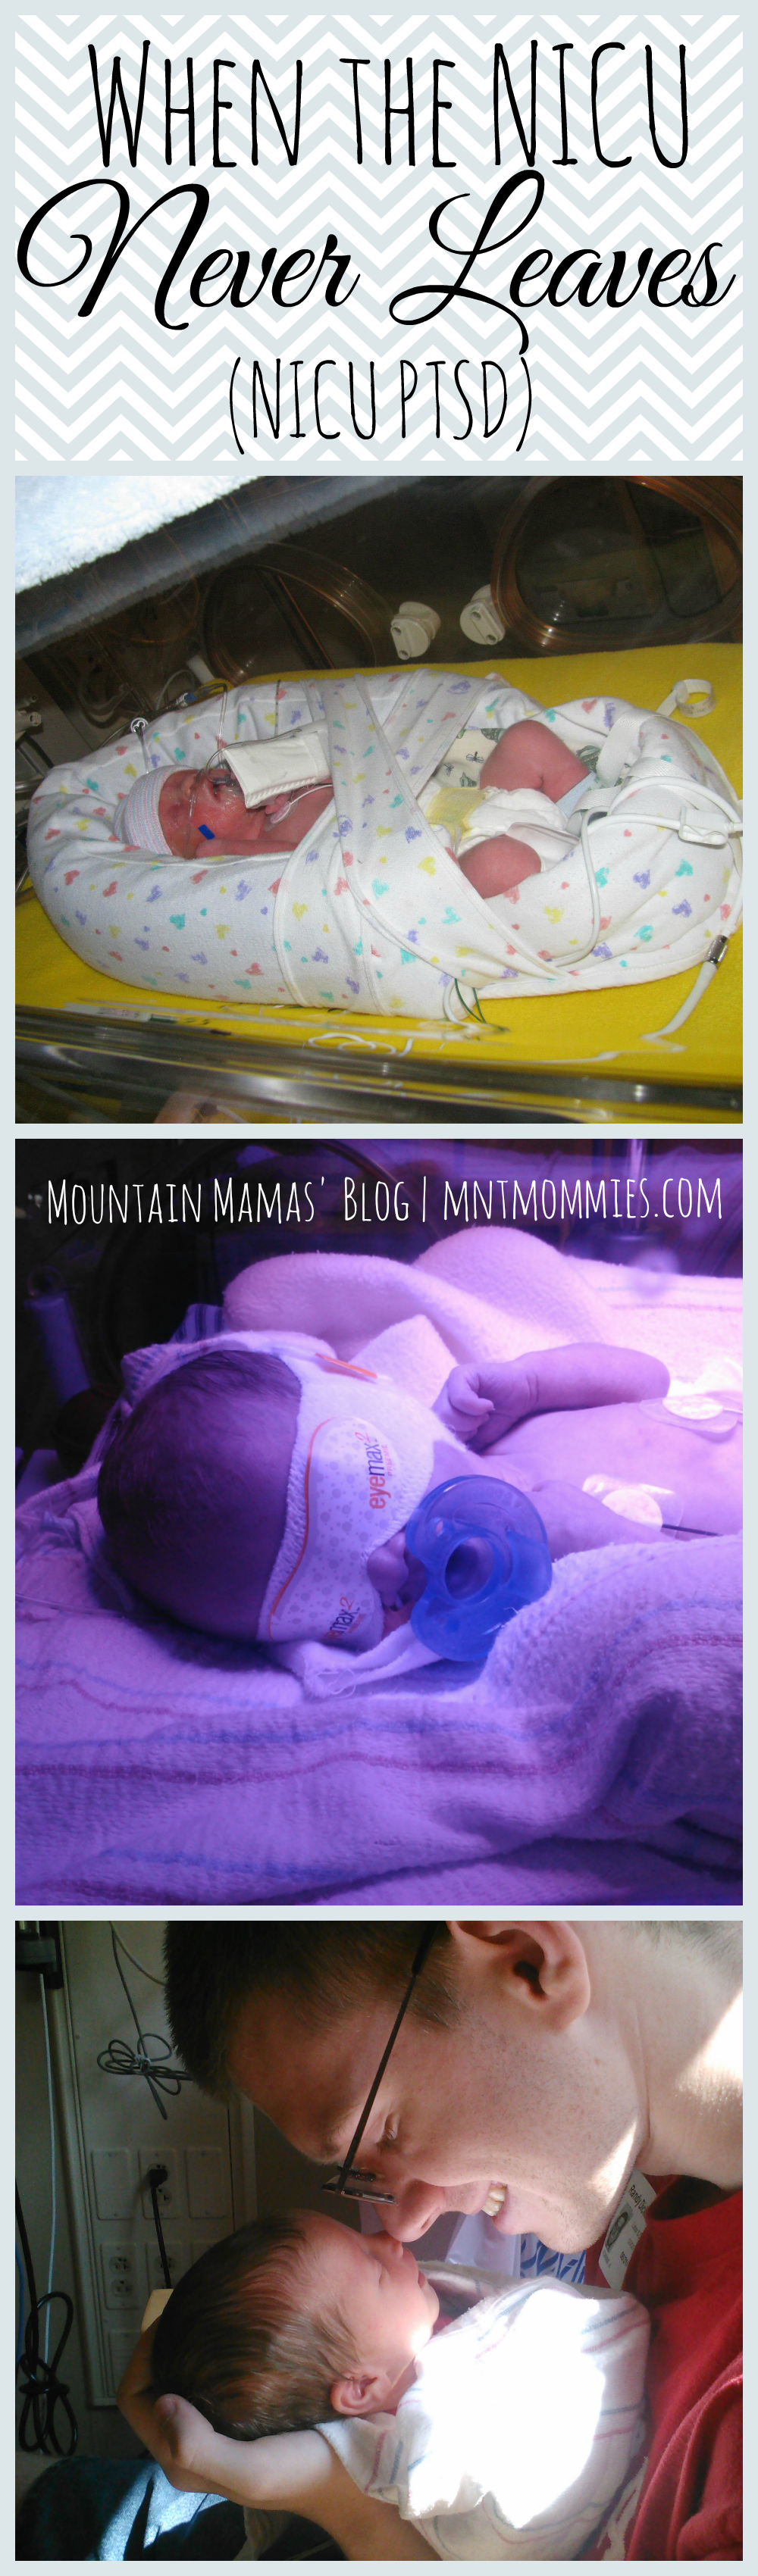 When the NICU Never Leaves (NICU PTSD) | Mountain Mamas' Blog | mntmommies.com